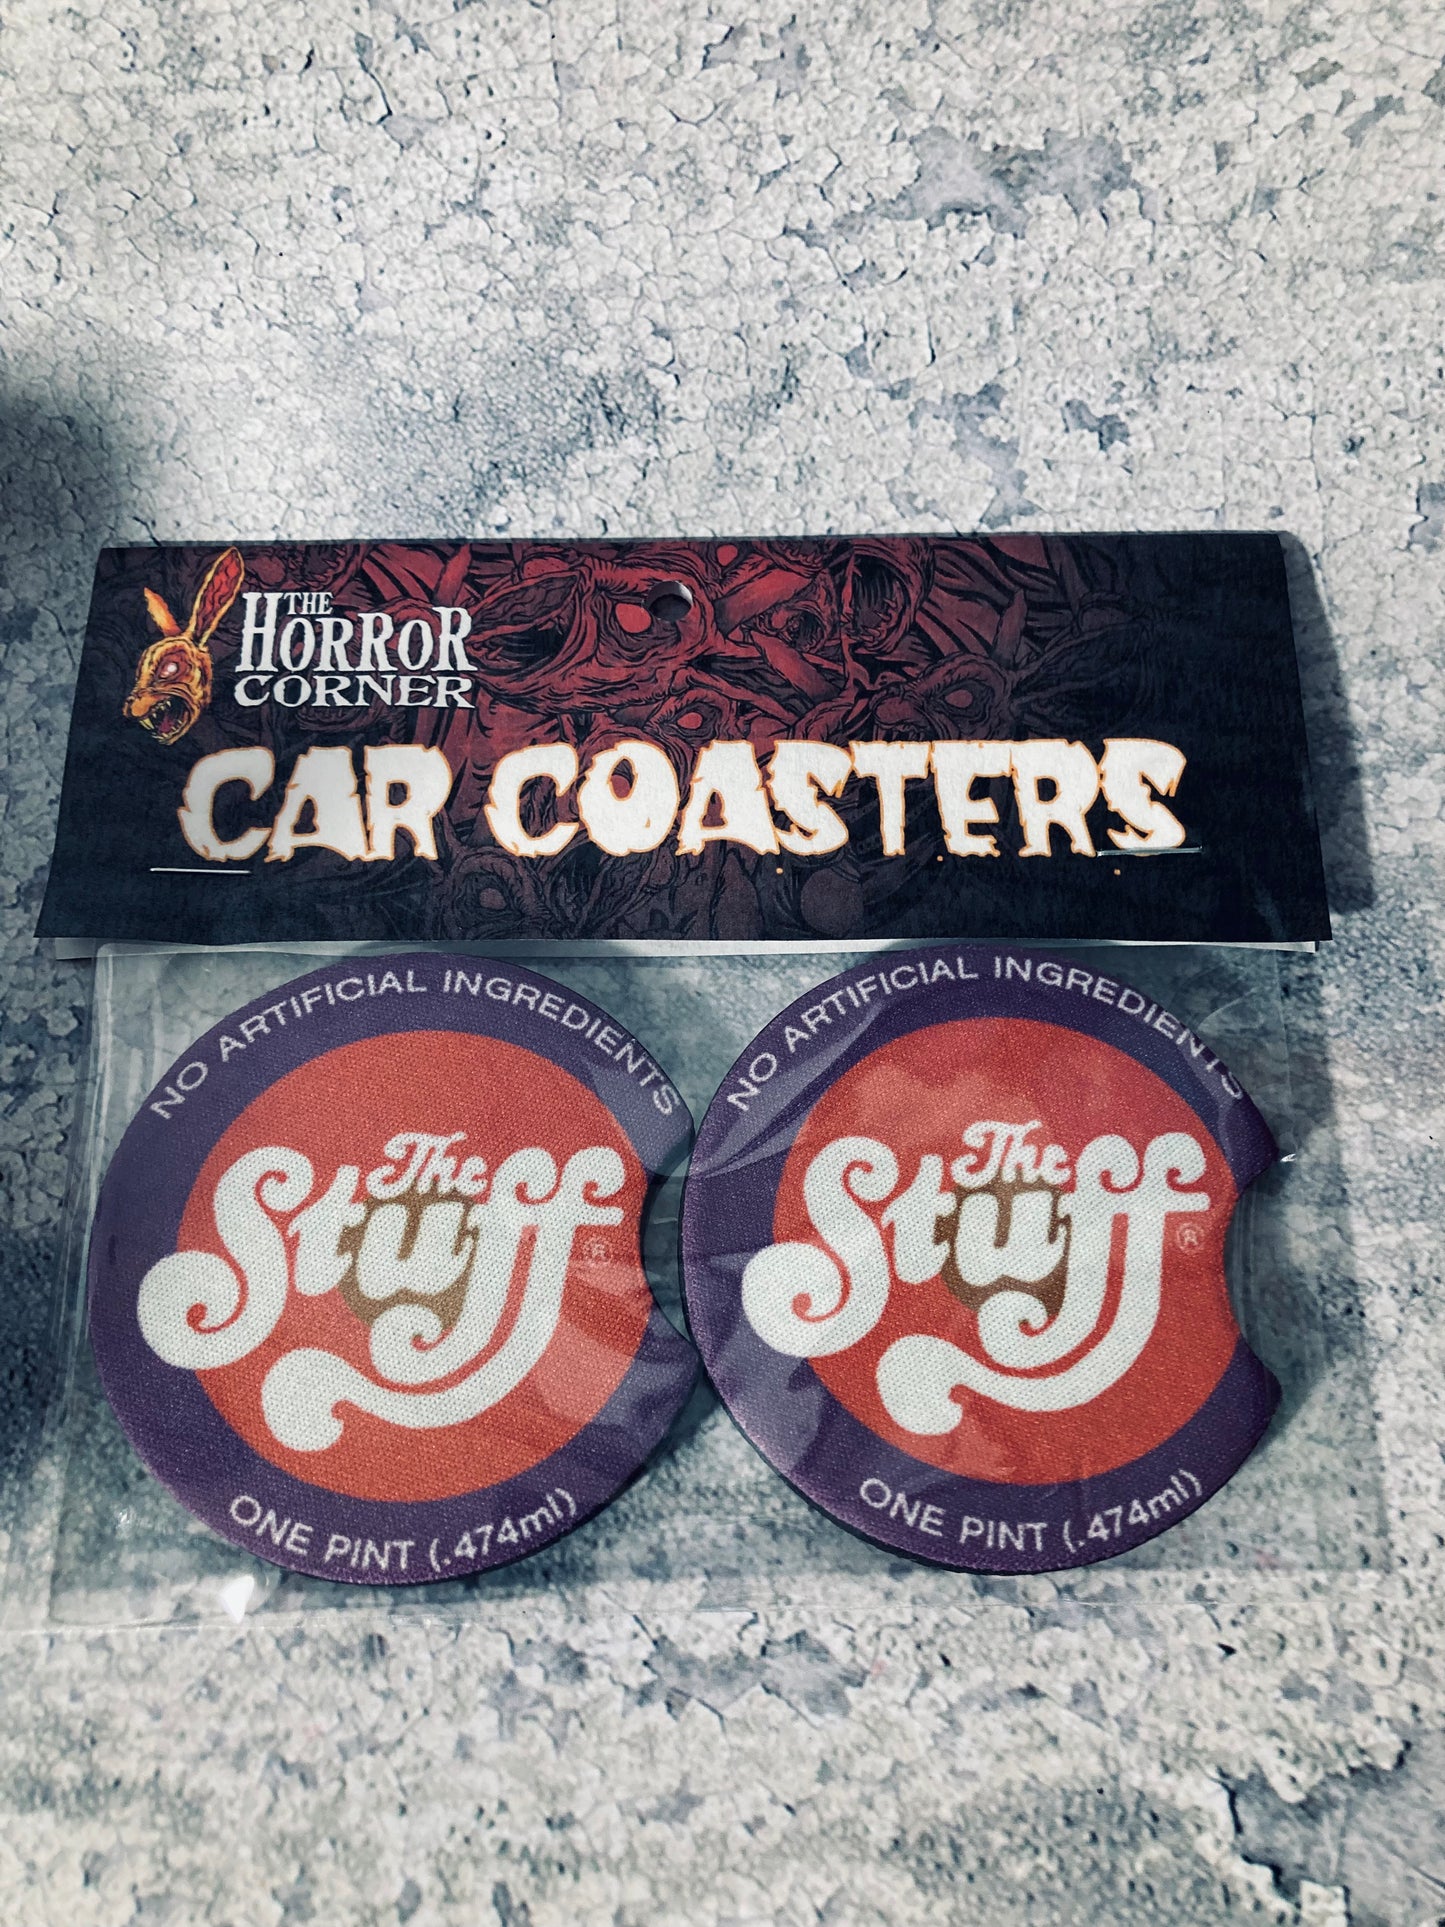 The Stuff car coaster pack